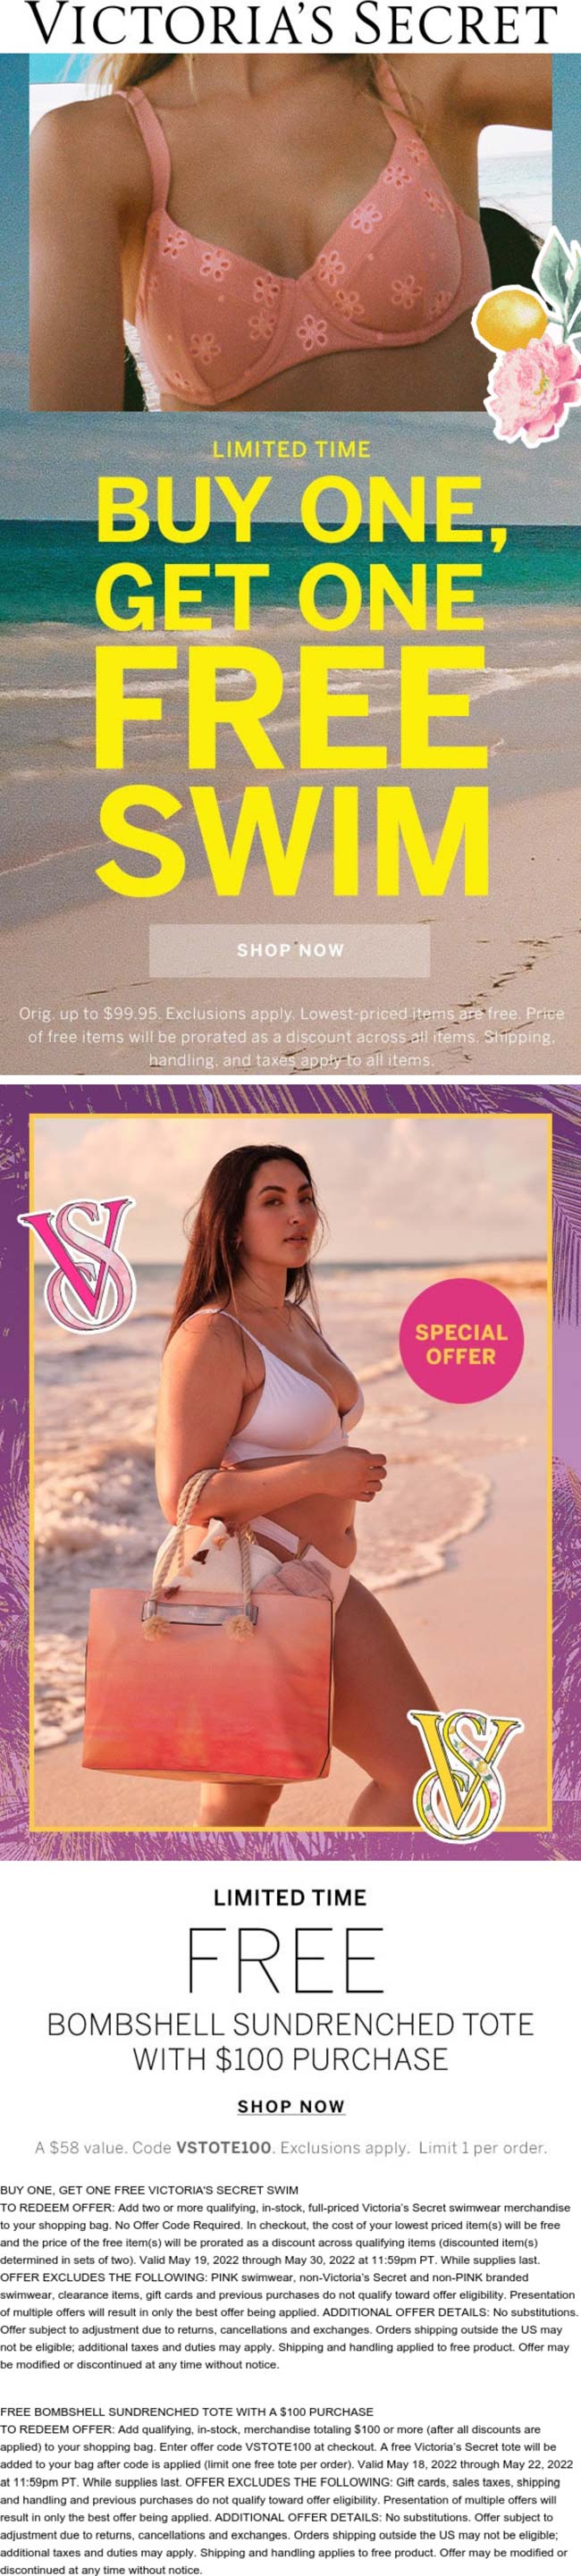 Victorias Secret stores Coupon  Second swim free + free tote on $100 at Victorias Secret via promo code VSTOTE100 #victoriassecret 